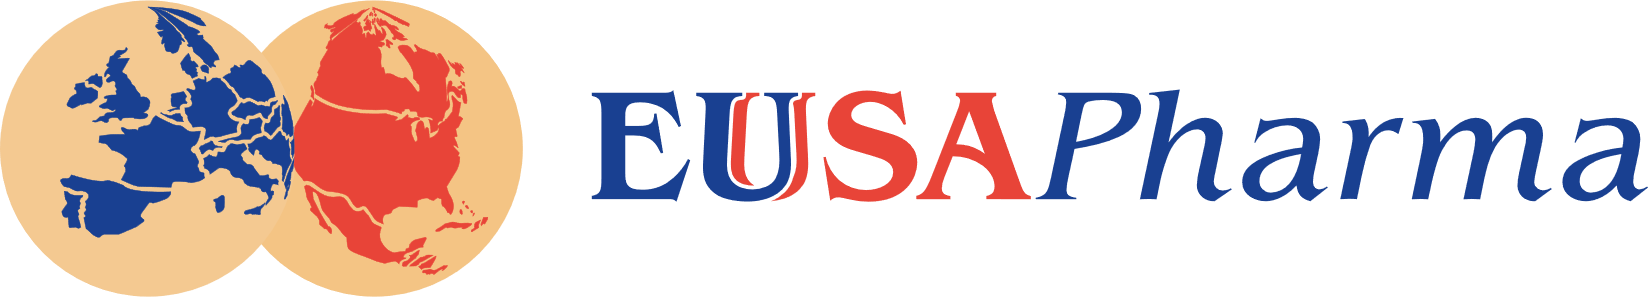 EUSA Pharma logo